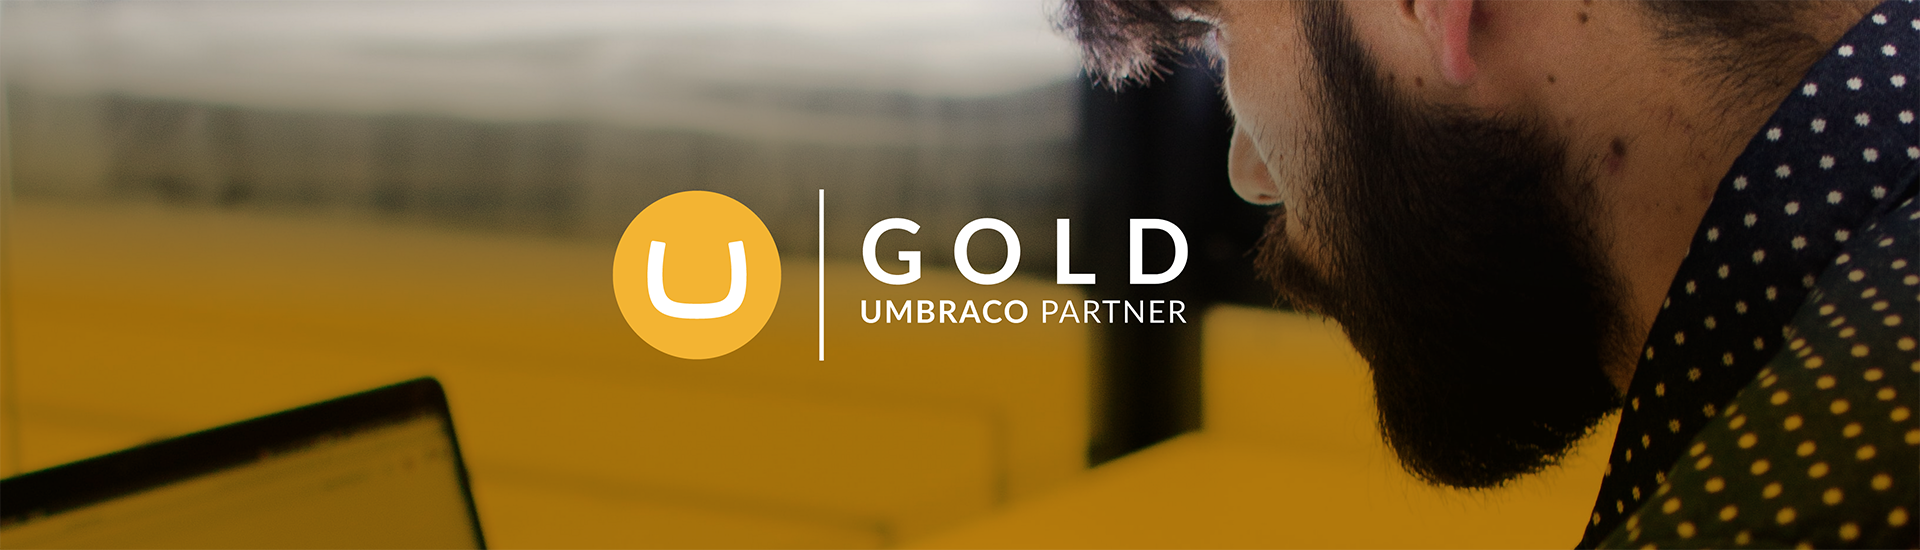 Umbraco Gold Partner Banner